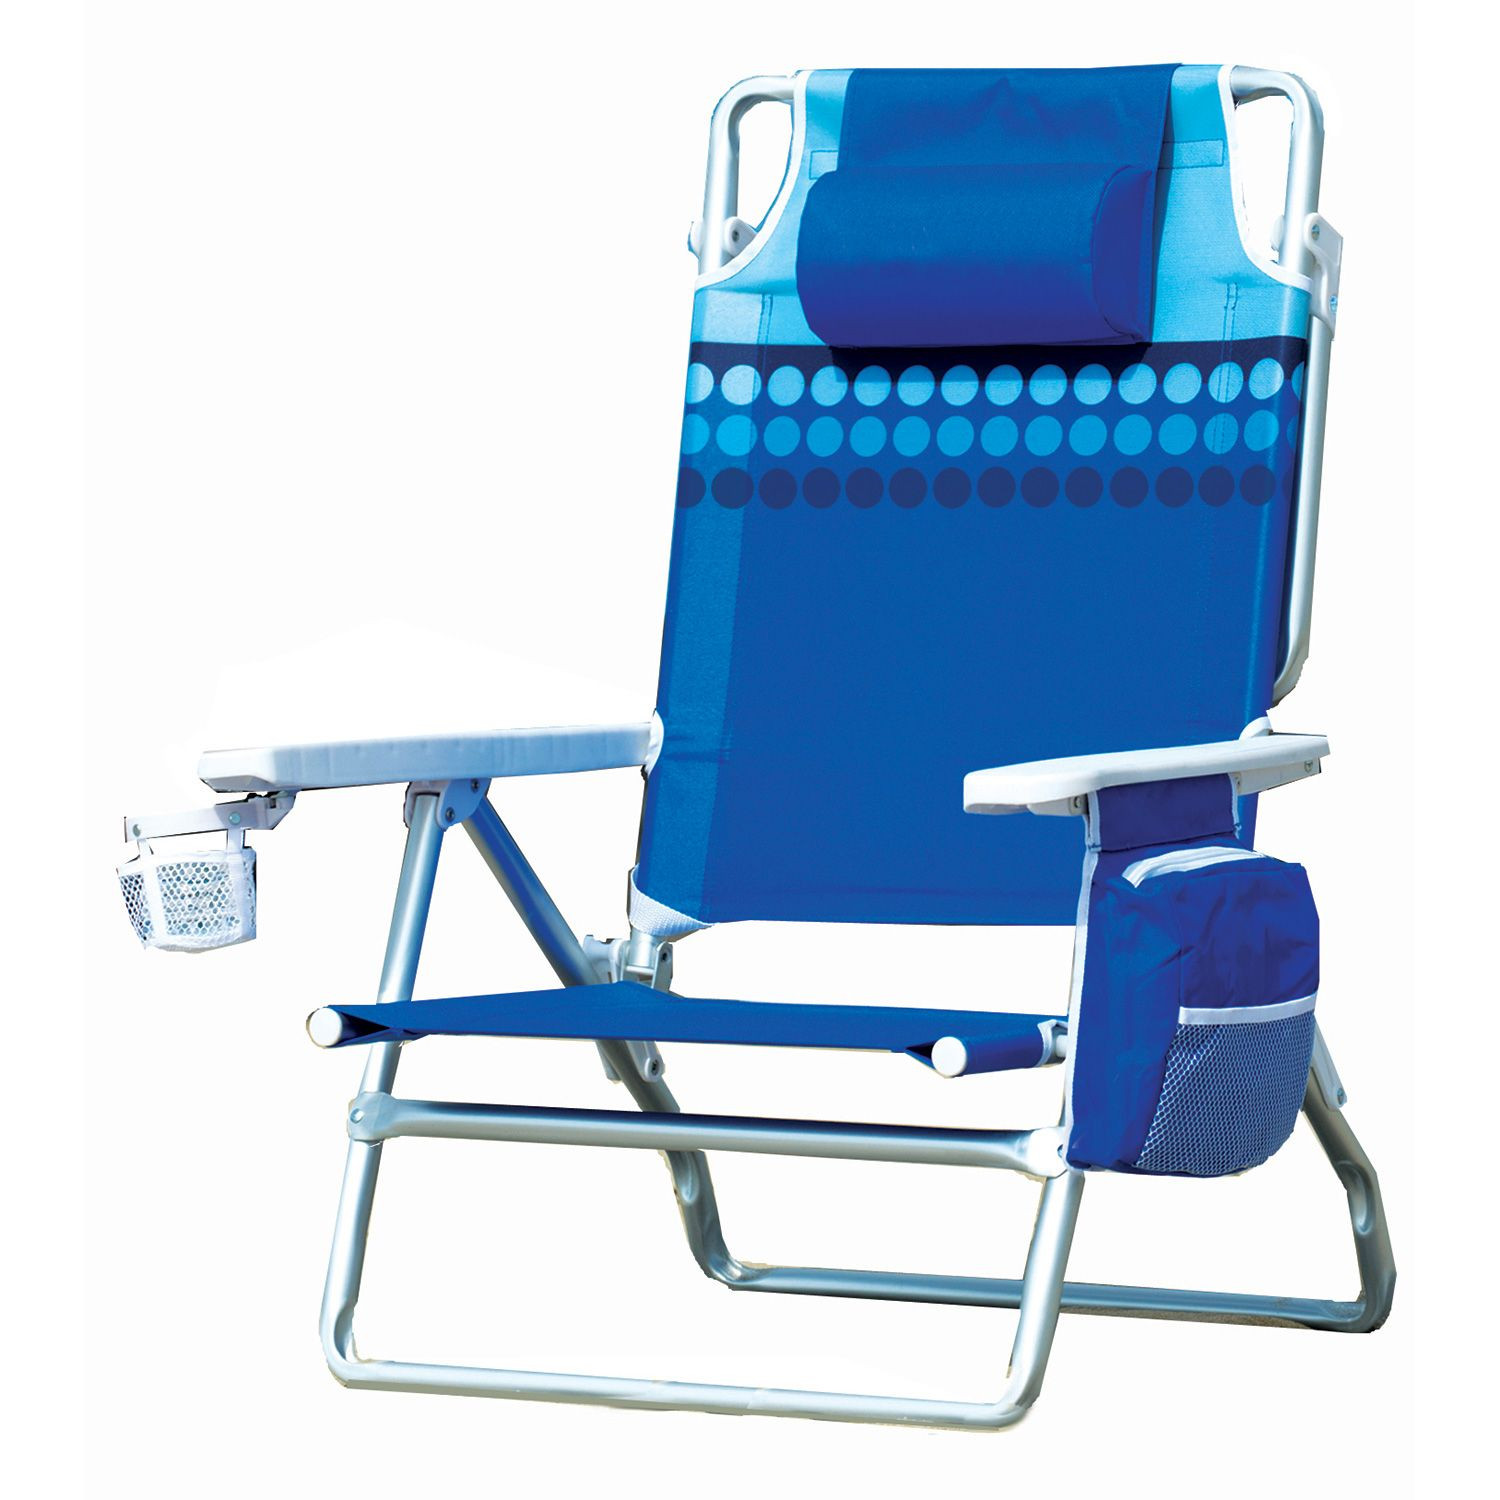 Best ideas about Nautica Beach Chair
. Save or Pin NAUTICA TONAL DOT BEACH CHAIR 5 POSITIONS Aluminum frame Now.